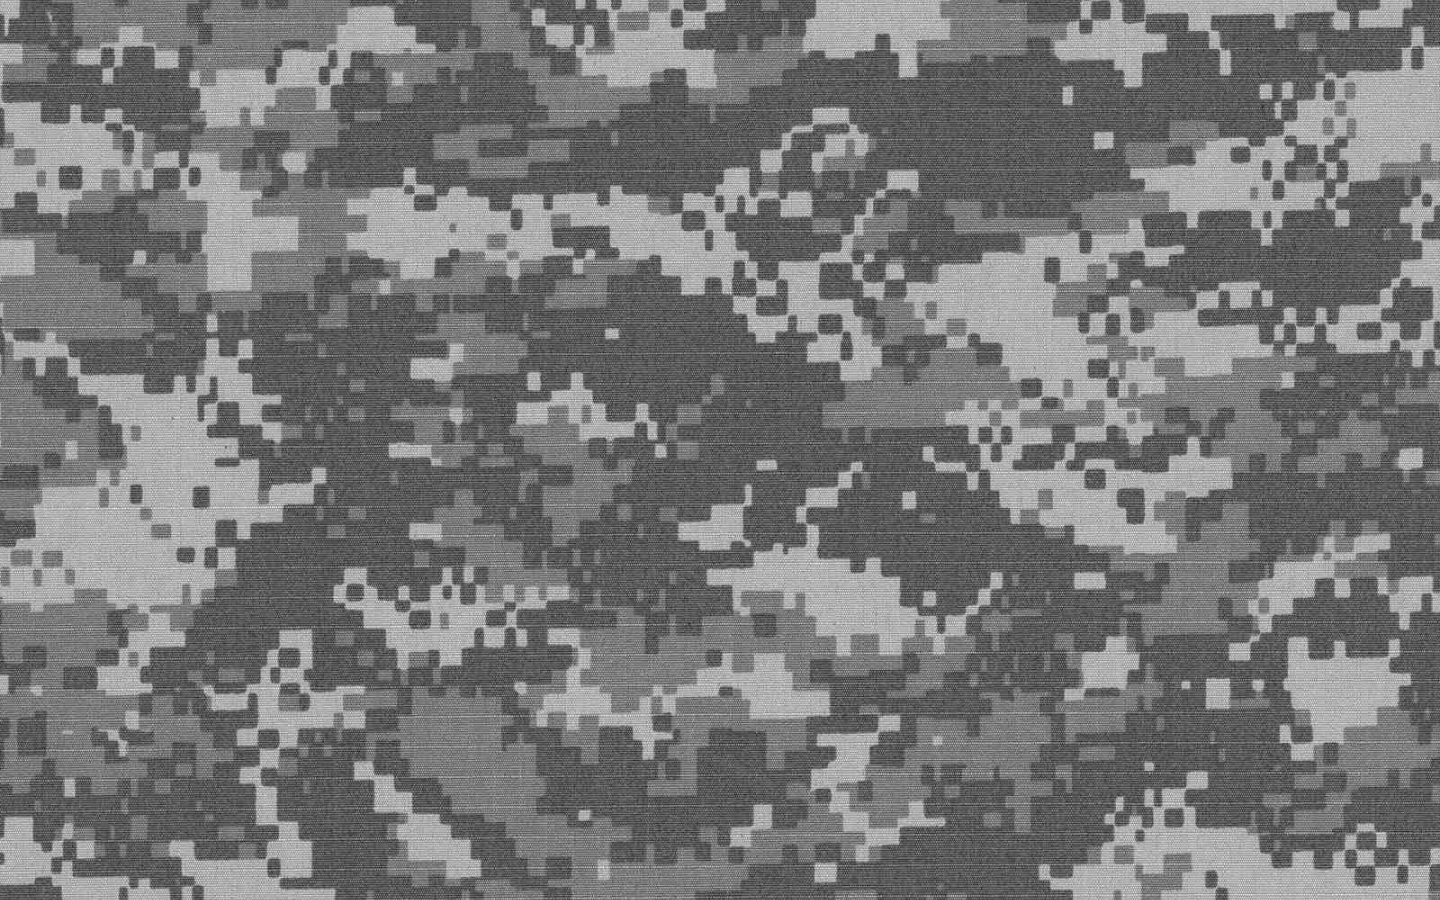 Digital Camouflage Wallpaper 1440x900 Digital Camouflage